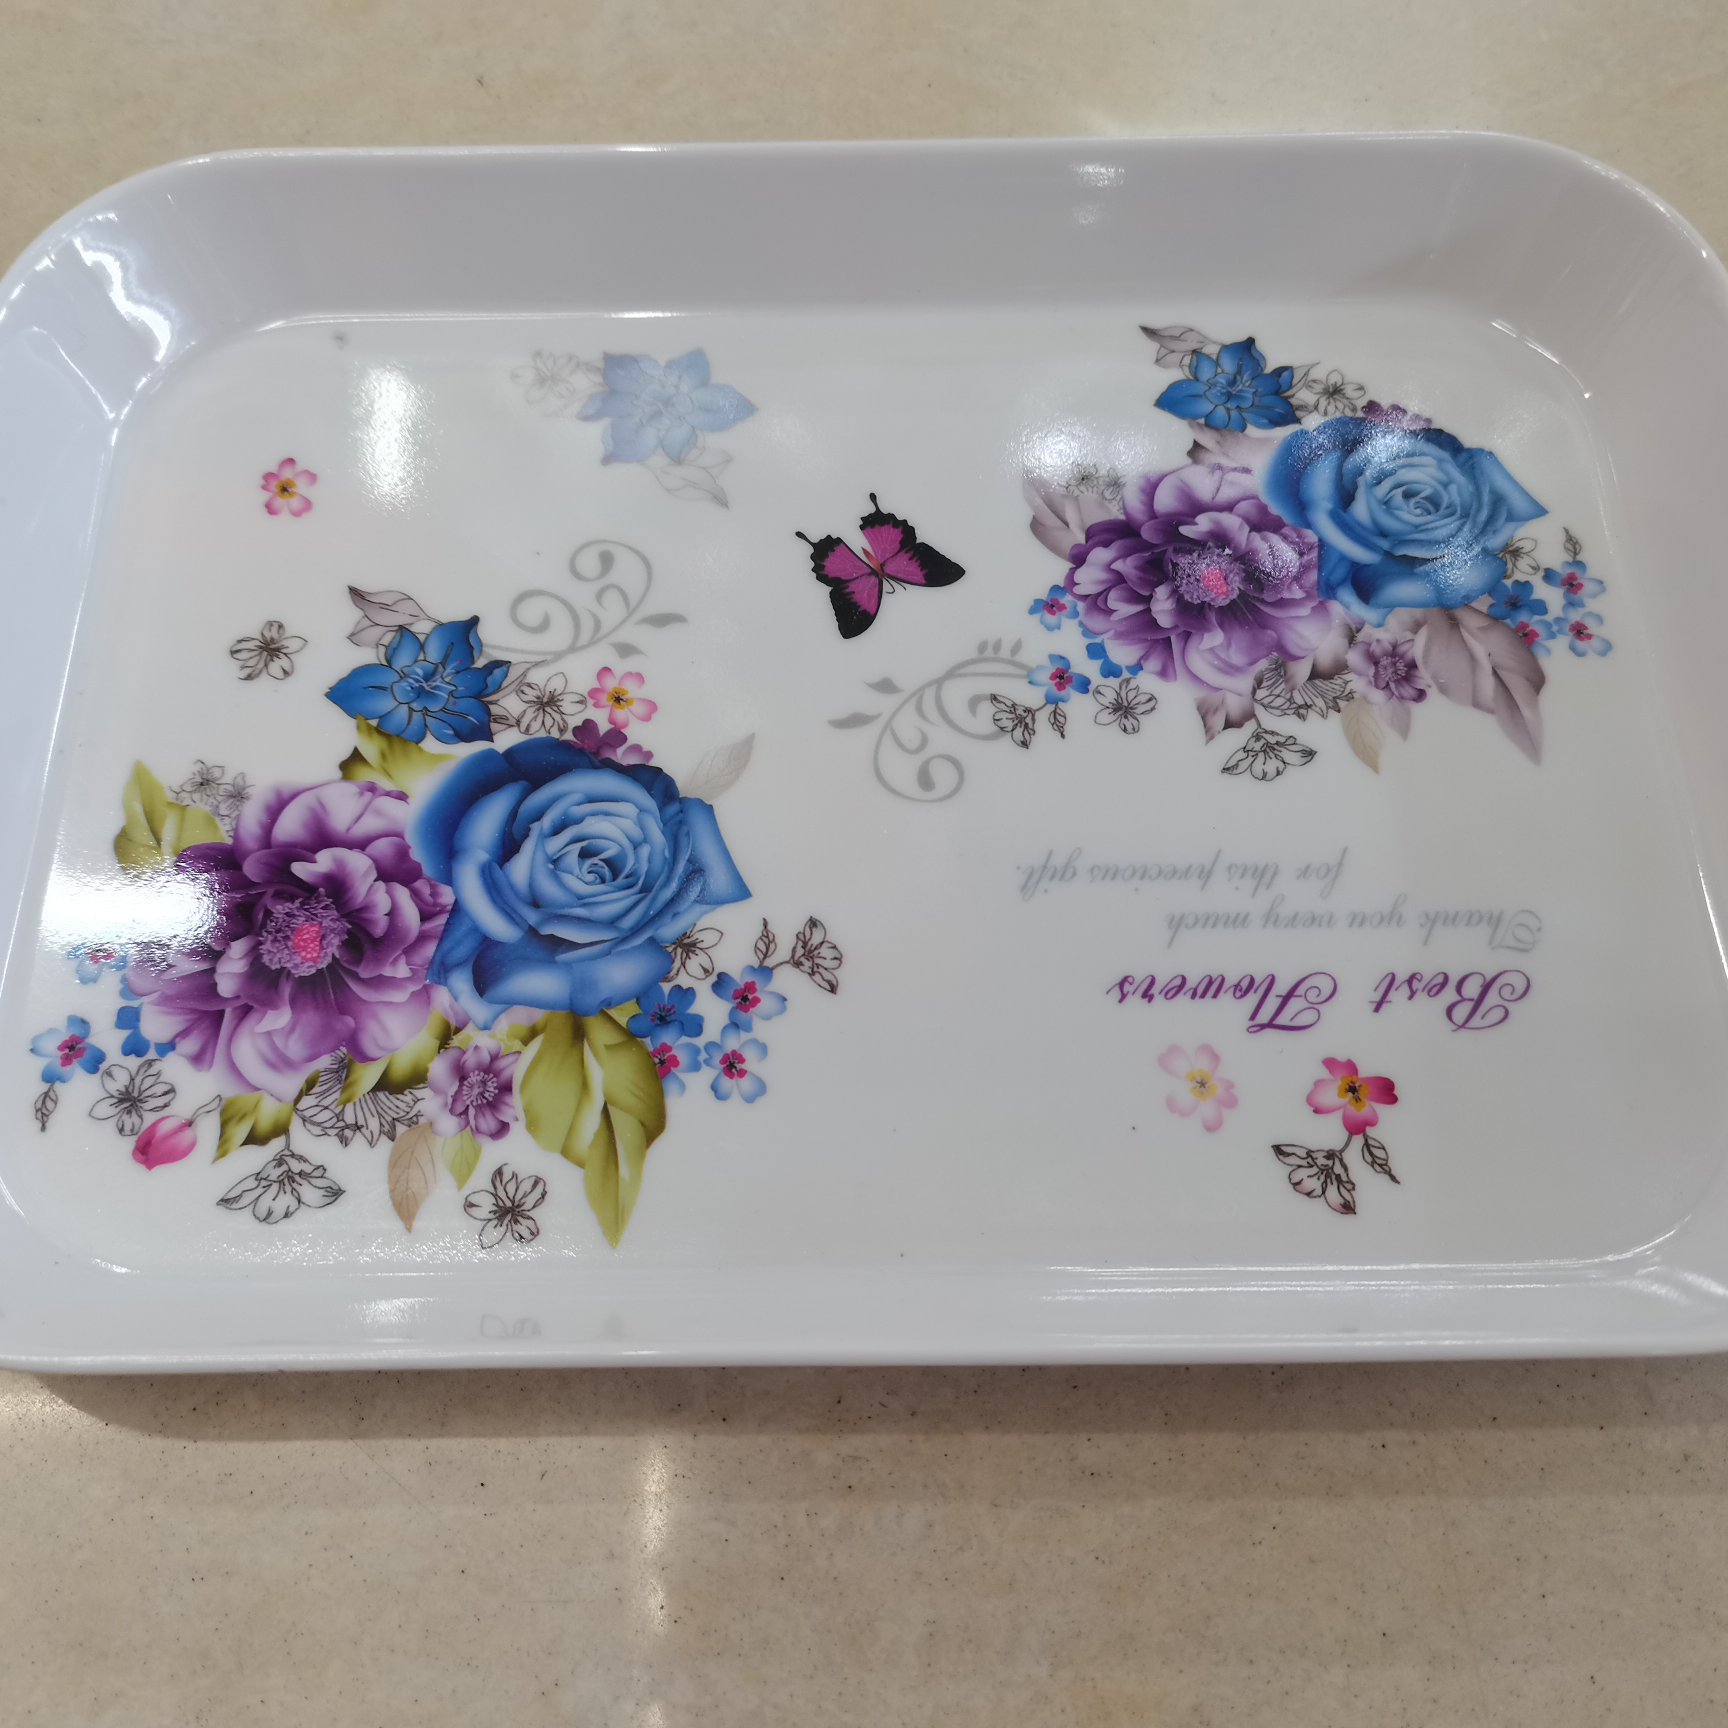 Amazon Melamine Cutlery Plate 2310 Rectangular Tray Imitation Porcelain Melamine Tableware Plastic Tray